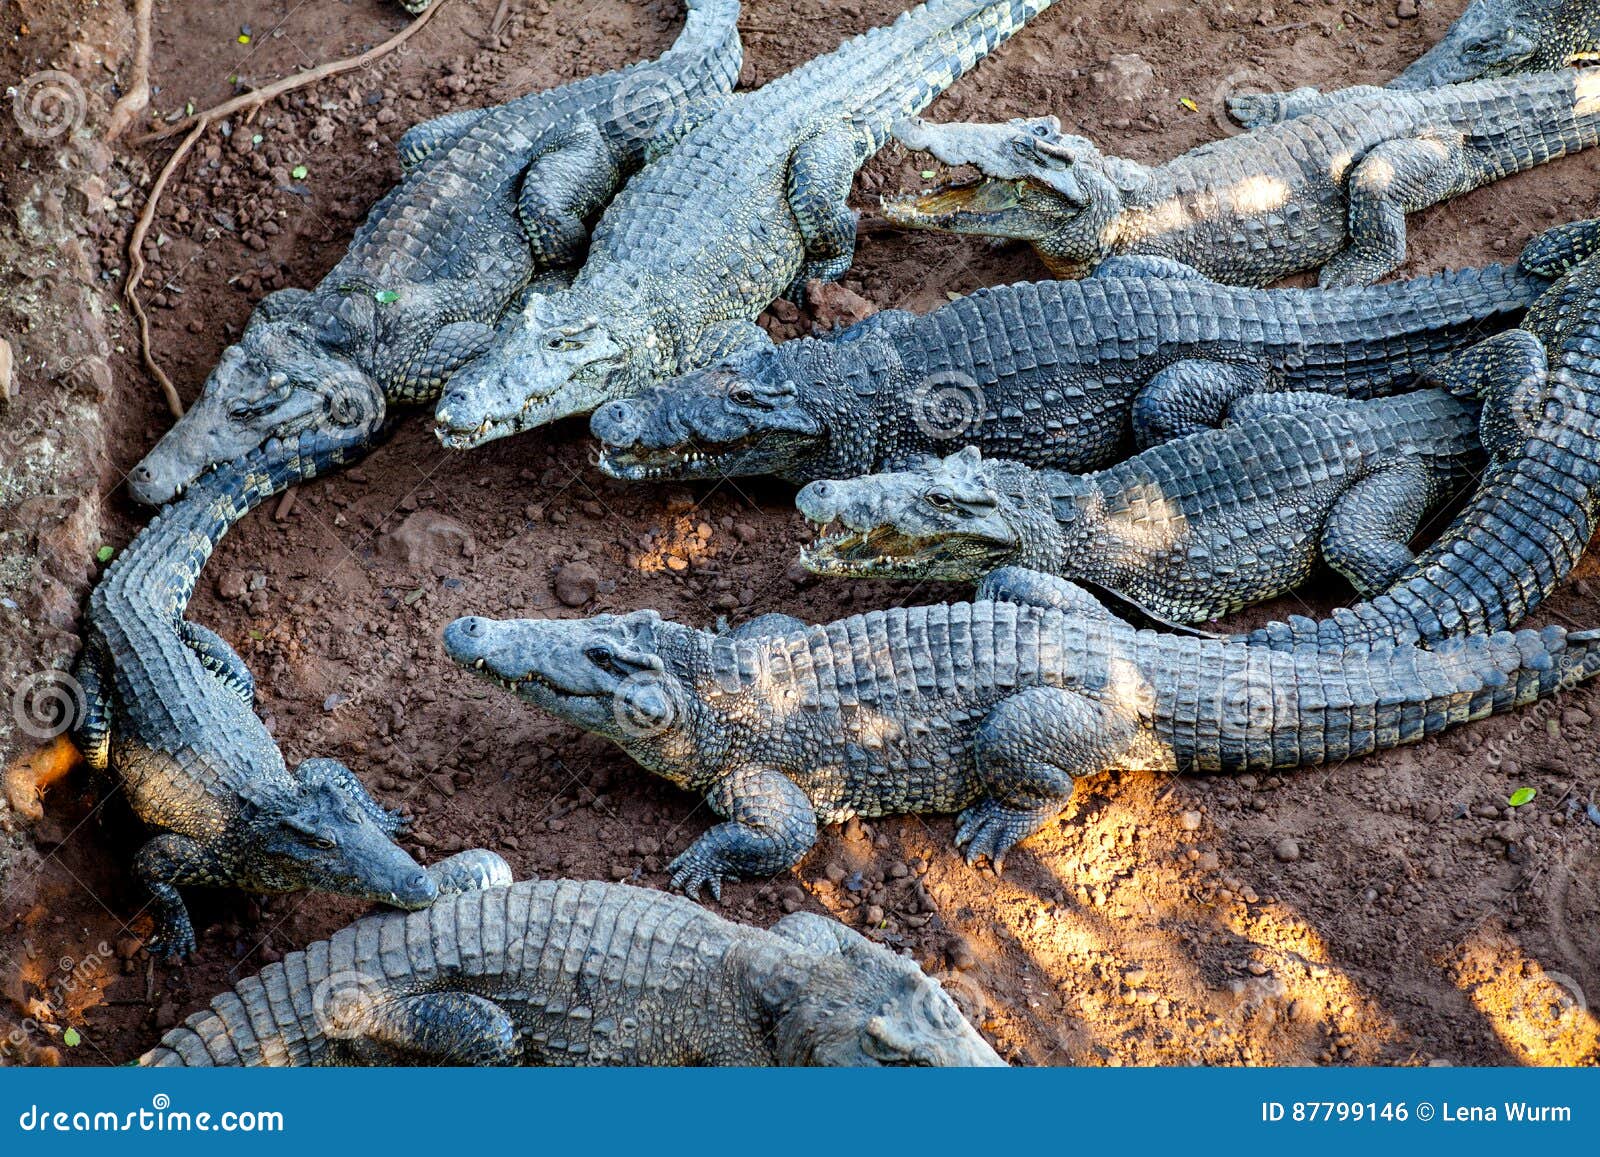 crocodiles from farm near the playa larga, cuba